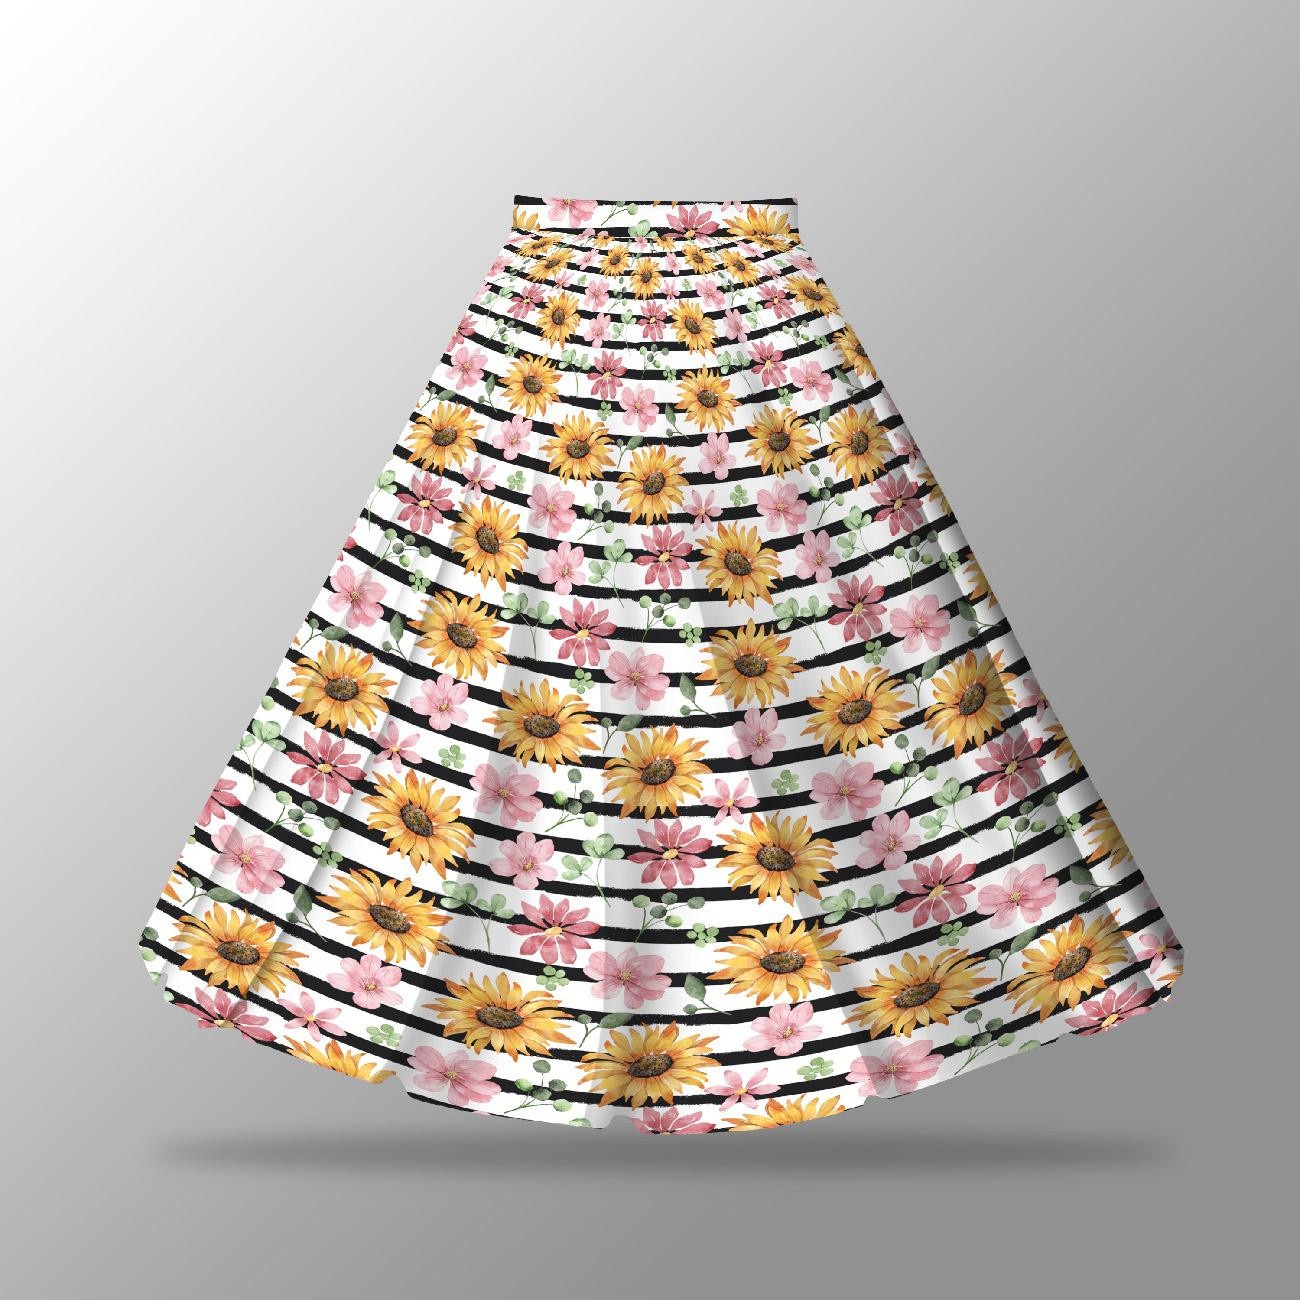 SUNFLOWERS / stripes - skirt panel "MAXI" - crepe